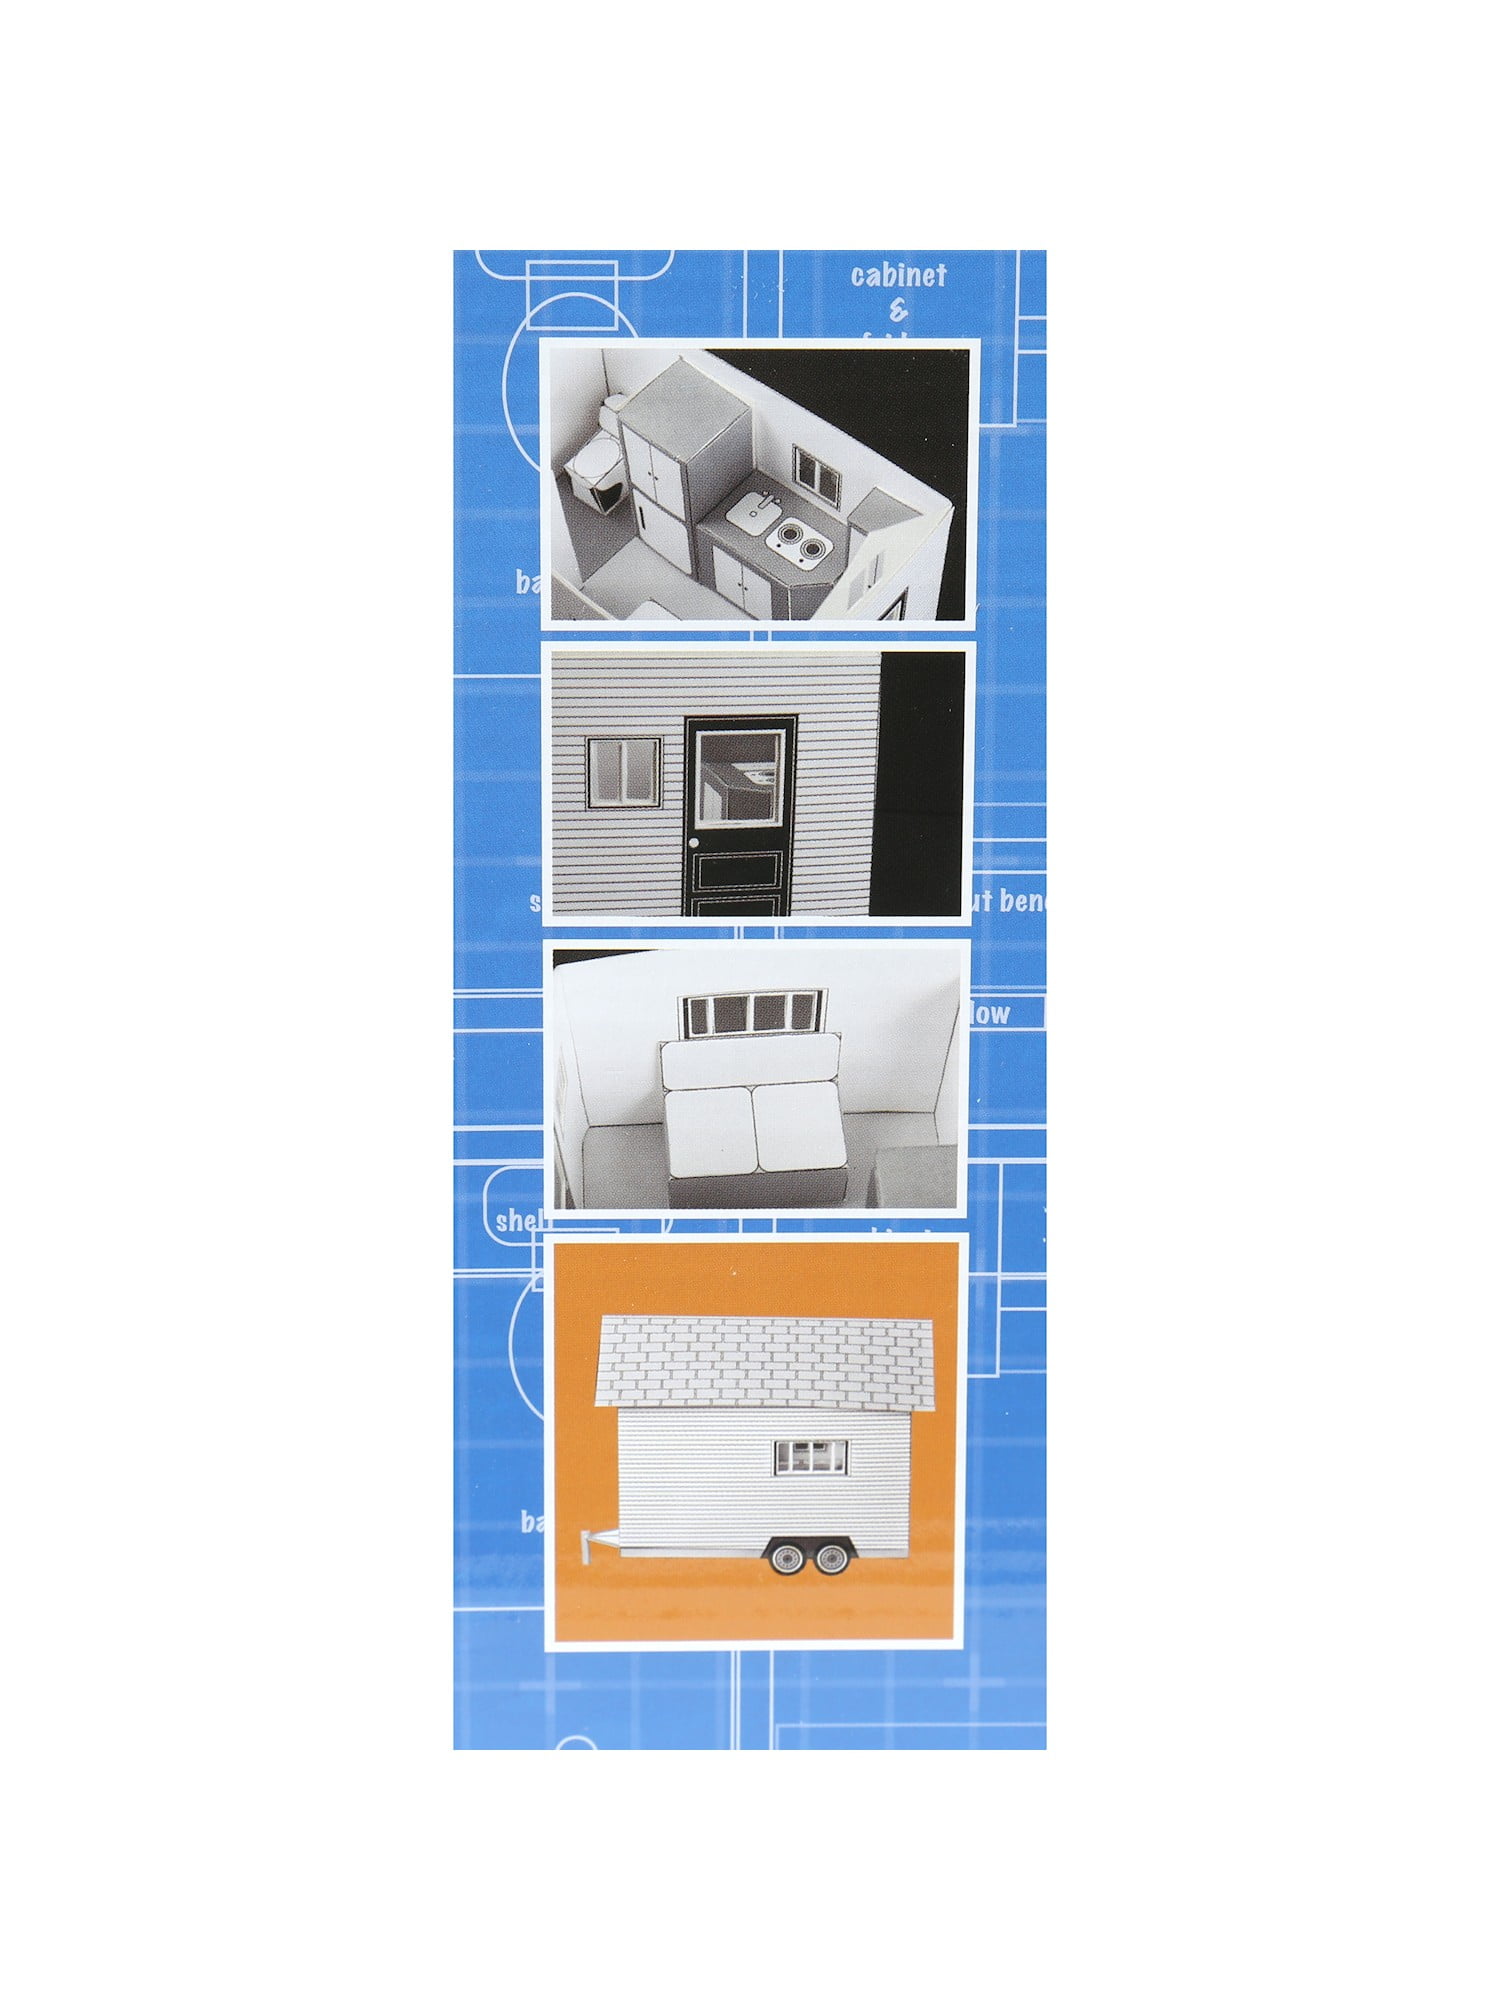 Tiny Houses Architecture Kit: Publications International Ltd.:  9781680229981: : Books